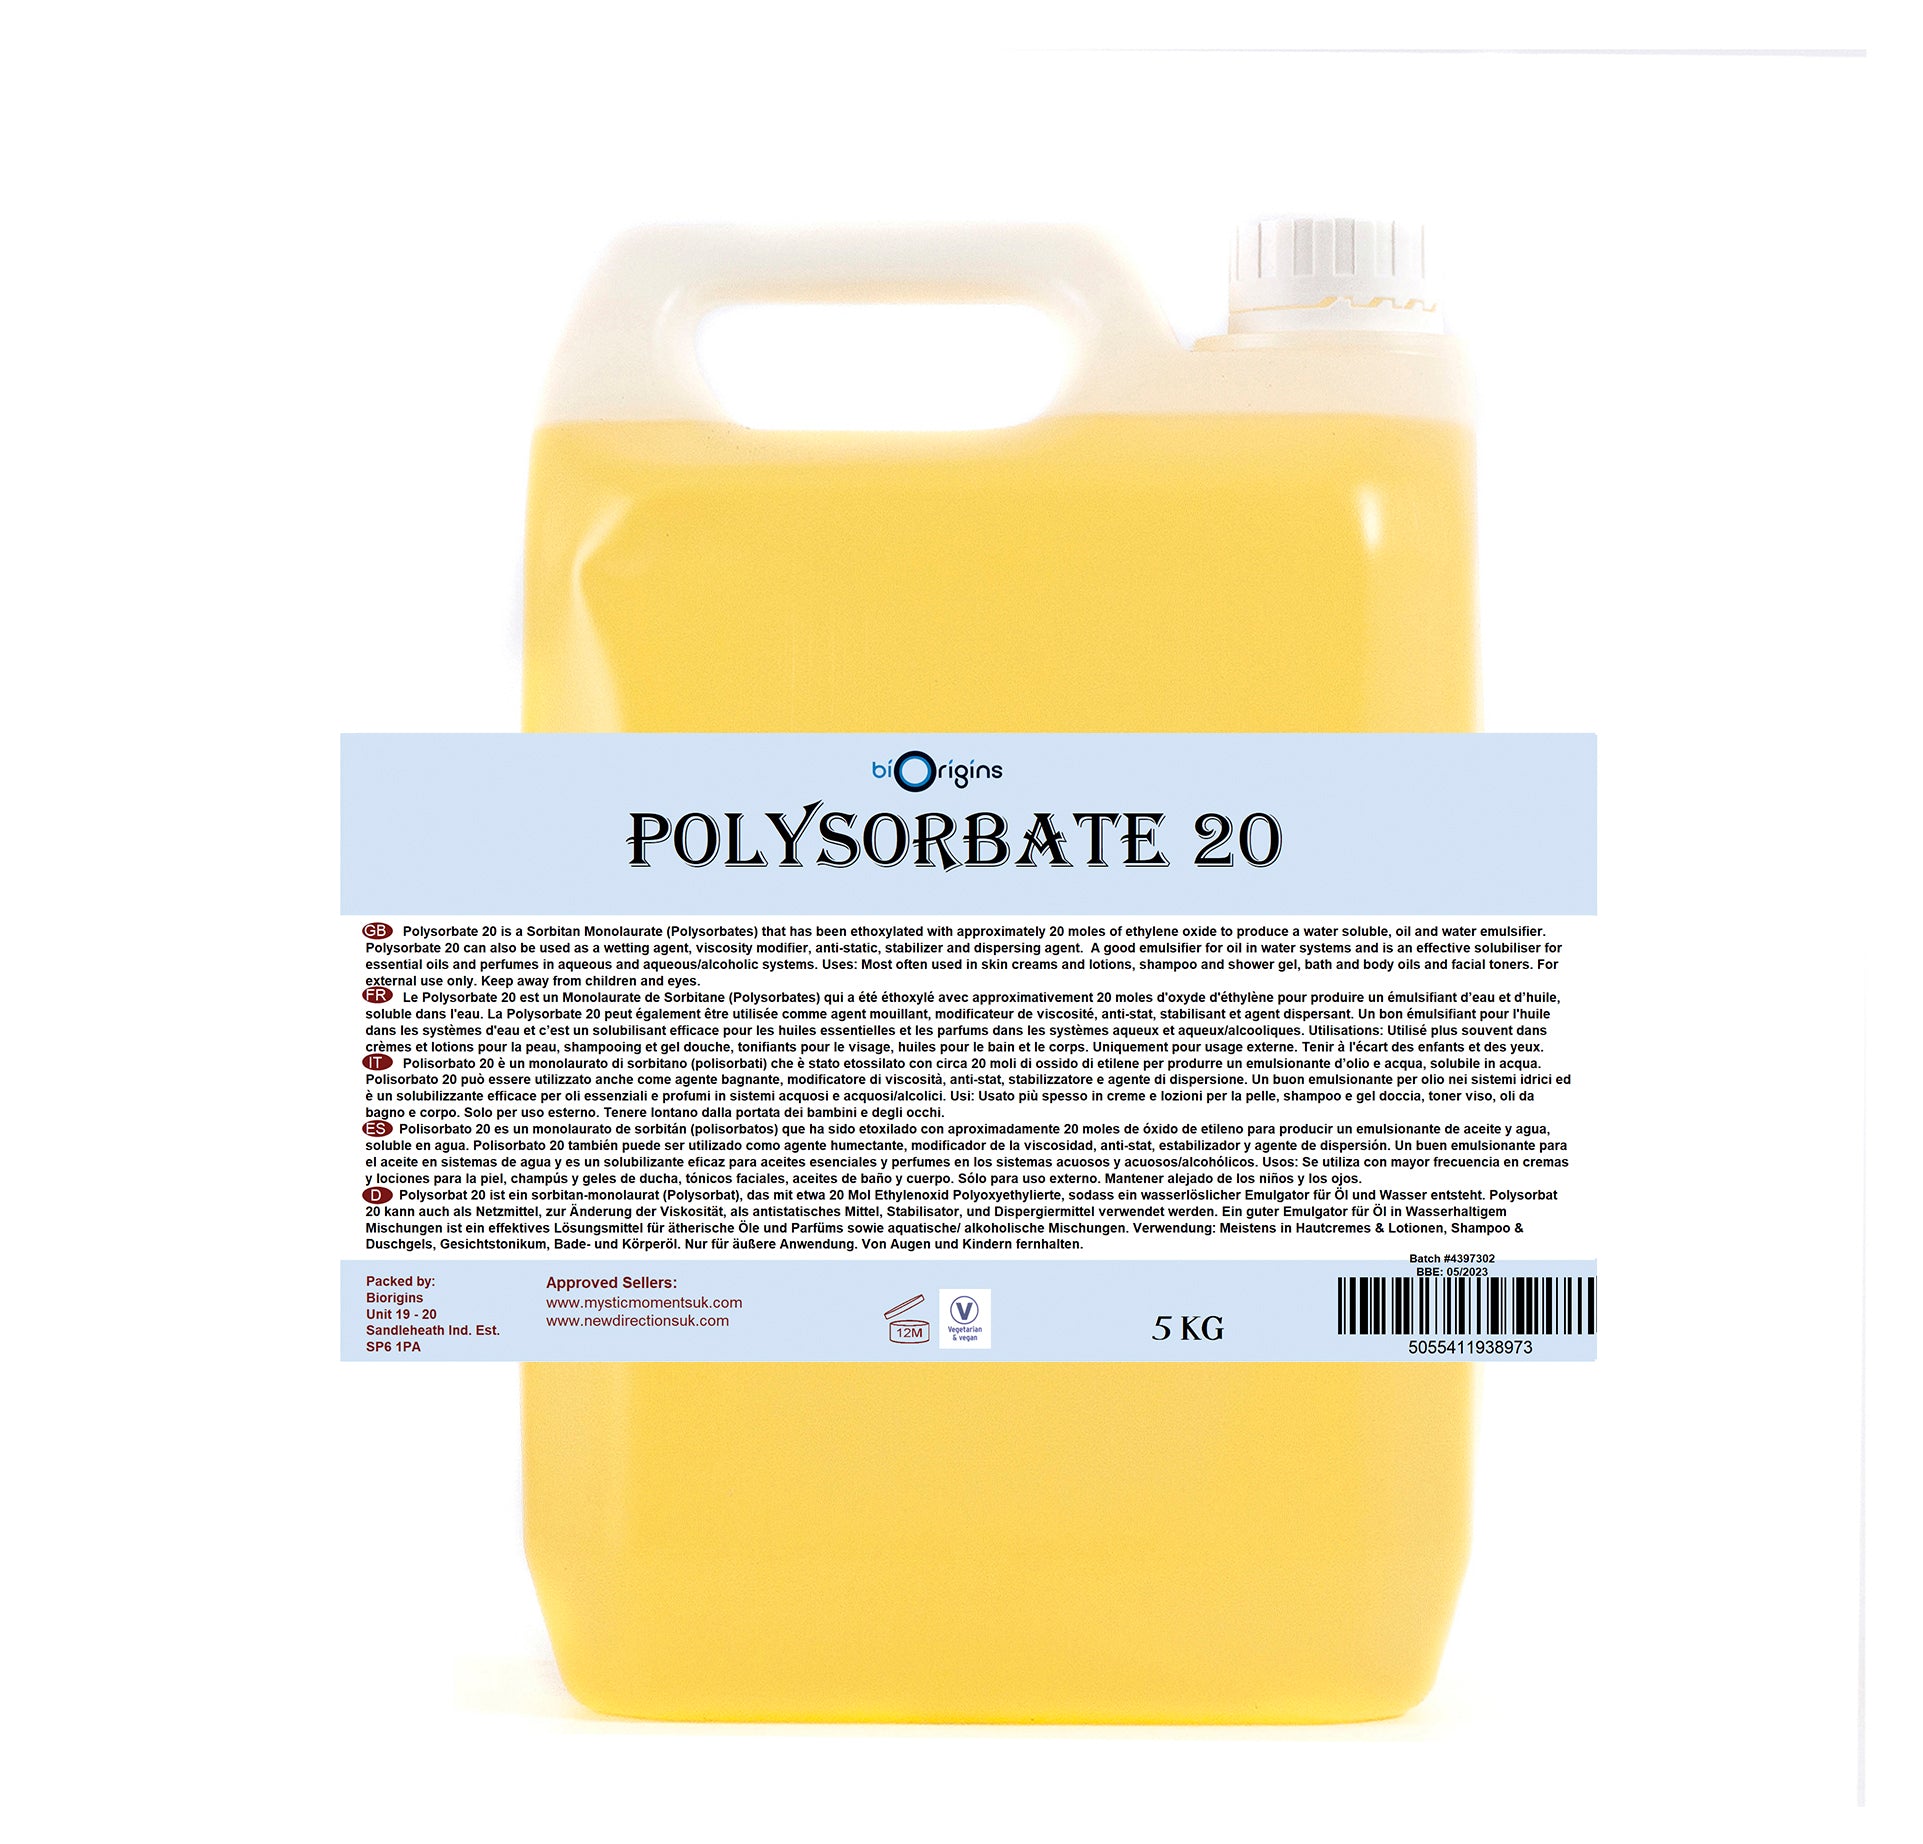 Polysorbate 20 - Solubilisers